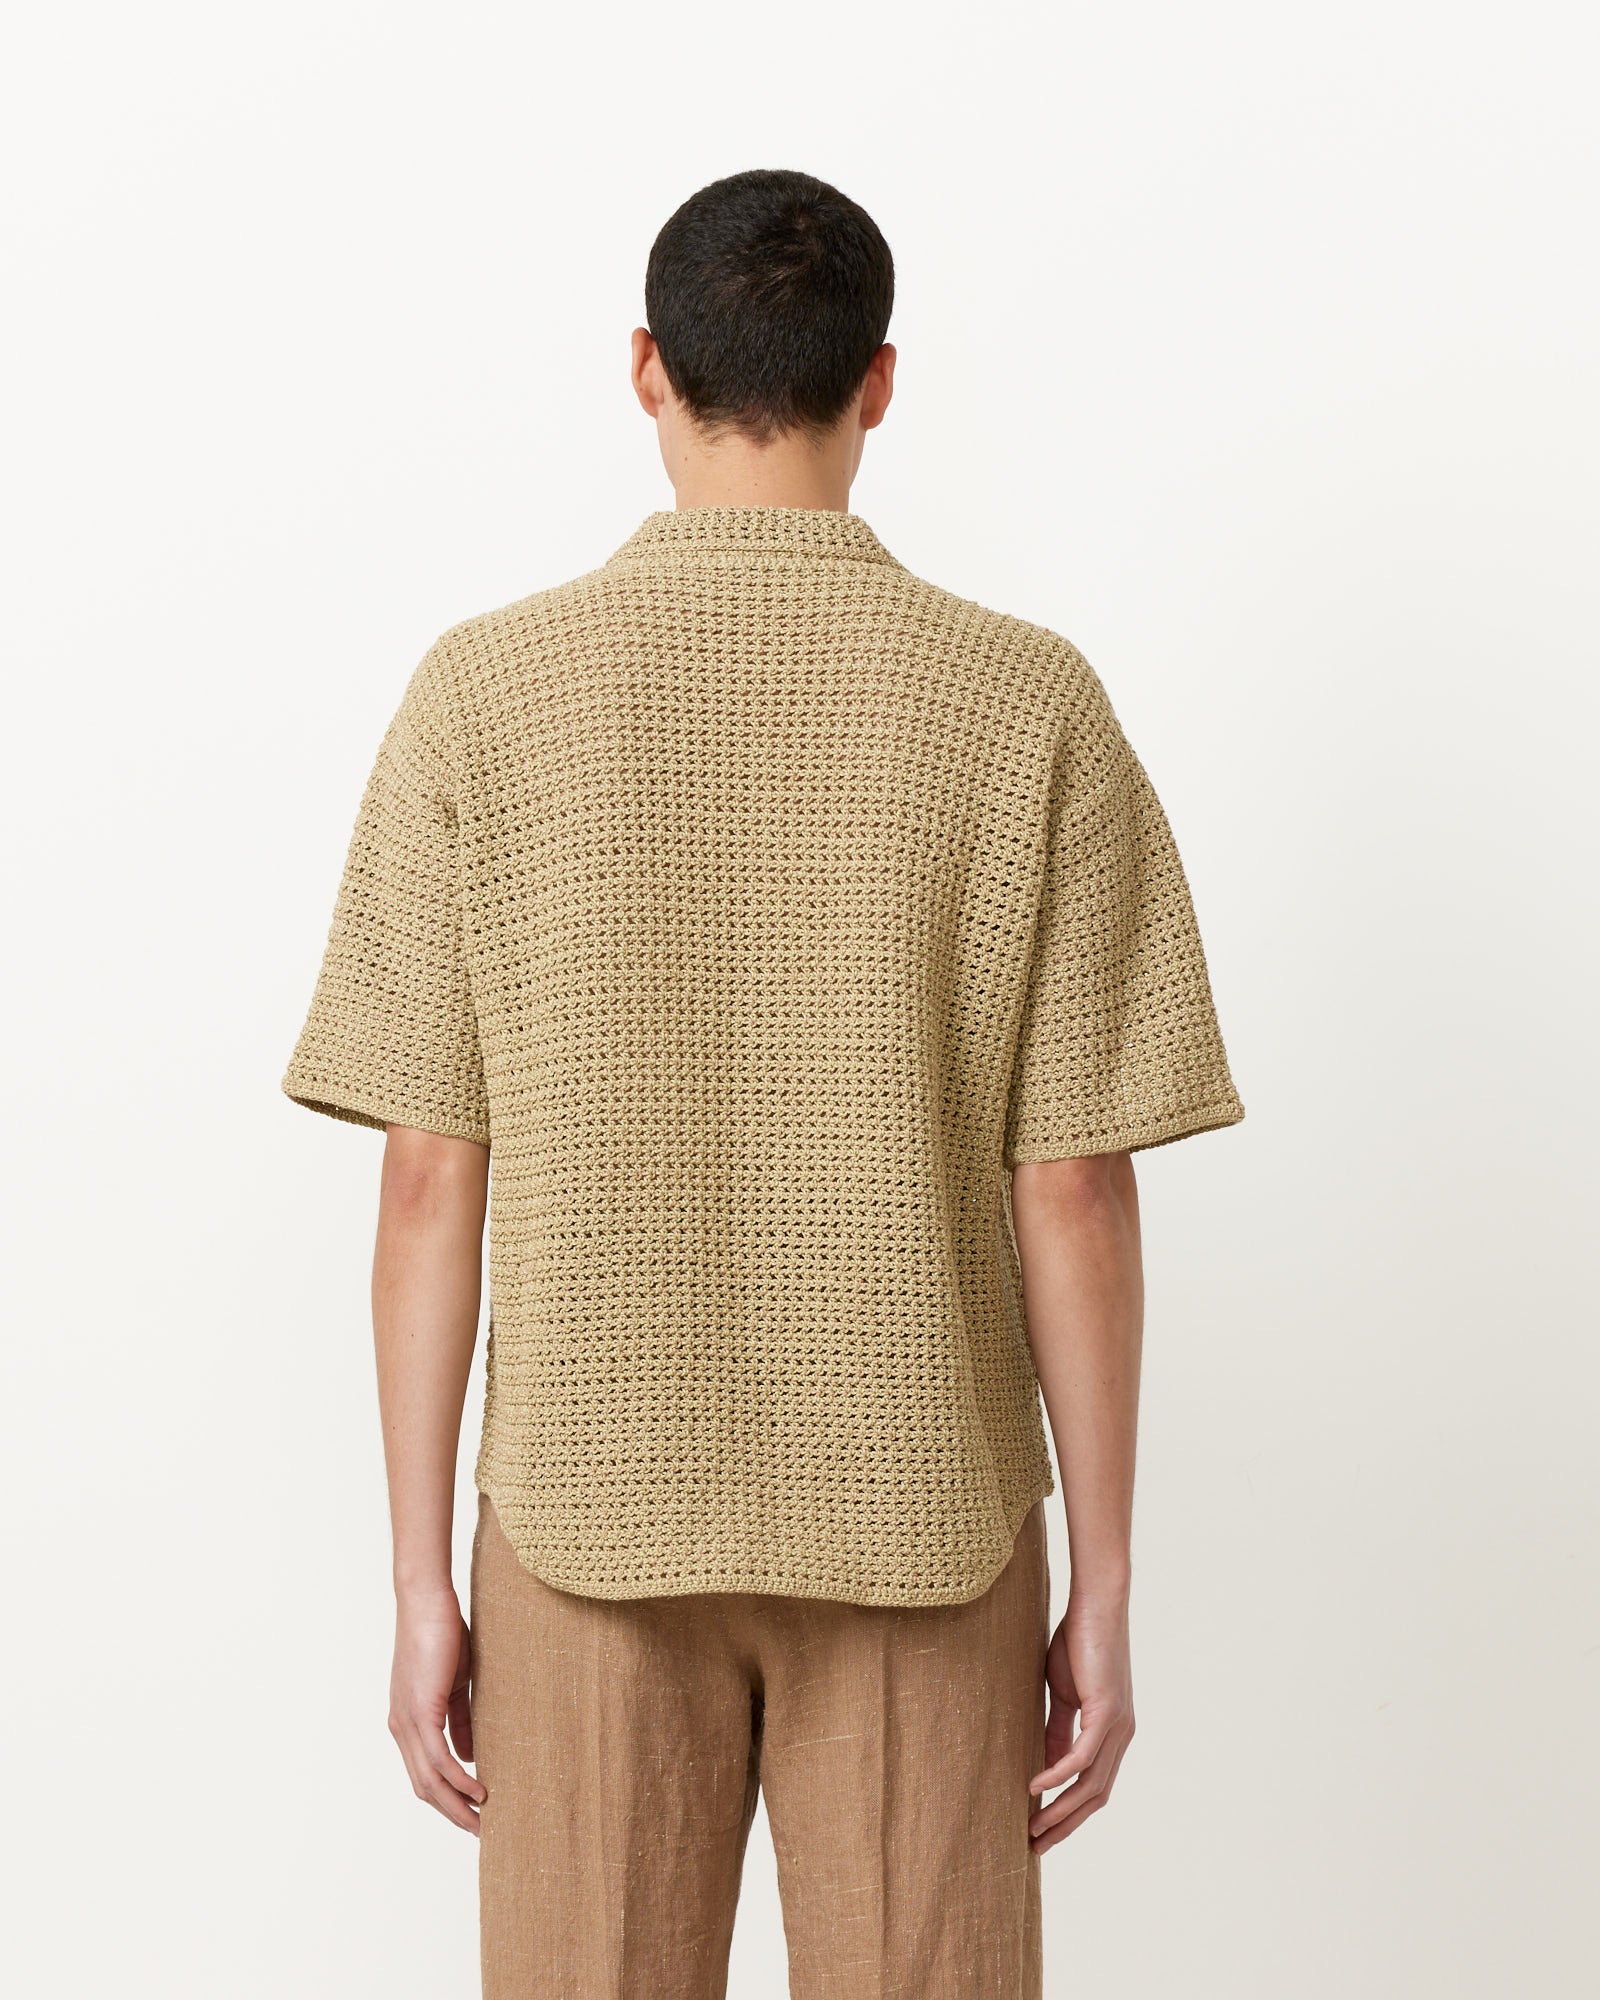 Hand Crochet Shirt in Khaki Beige